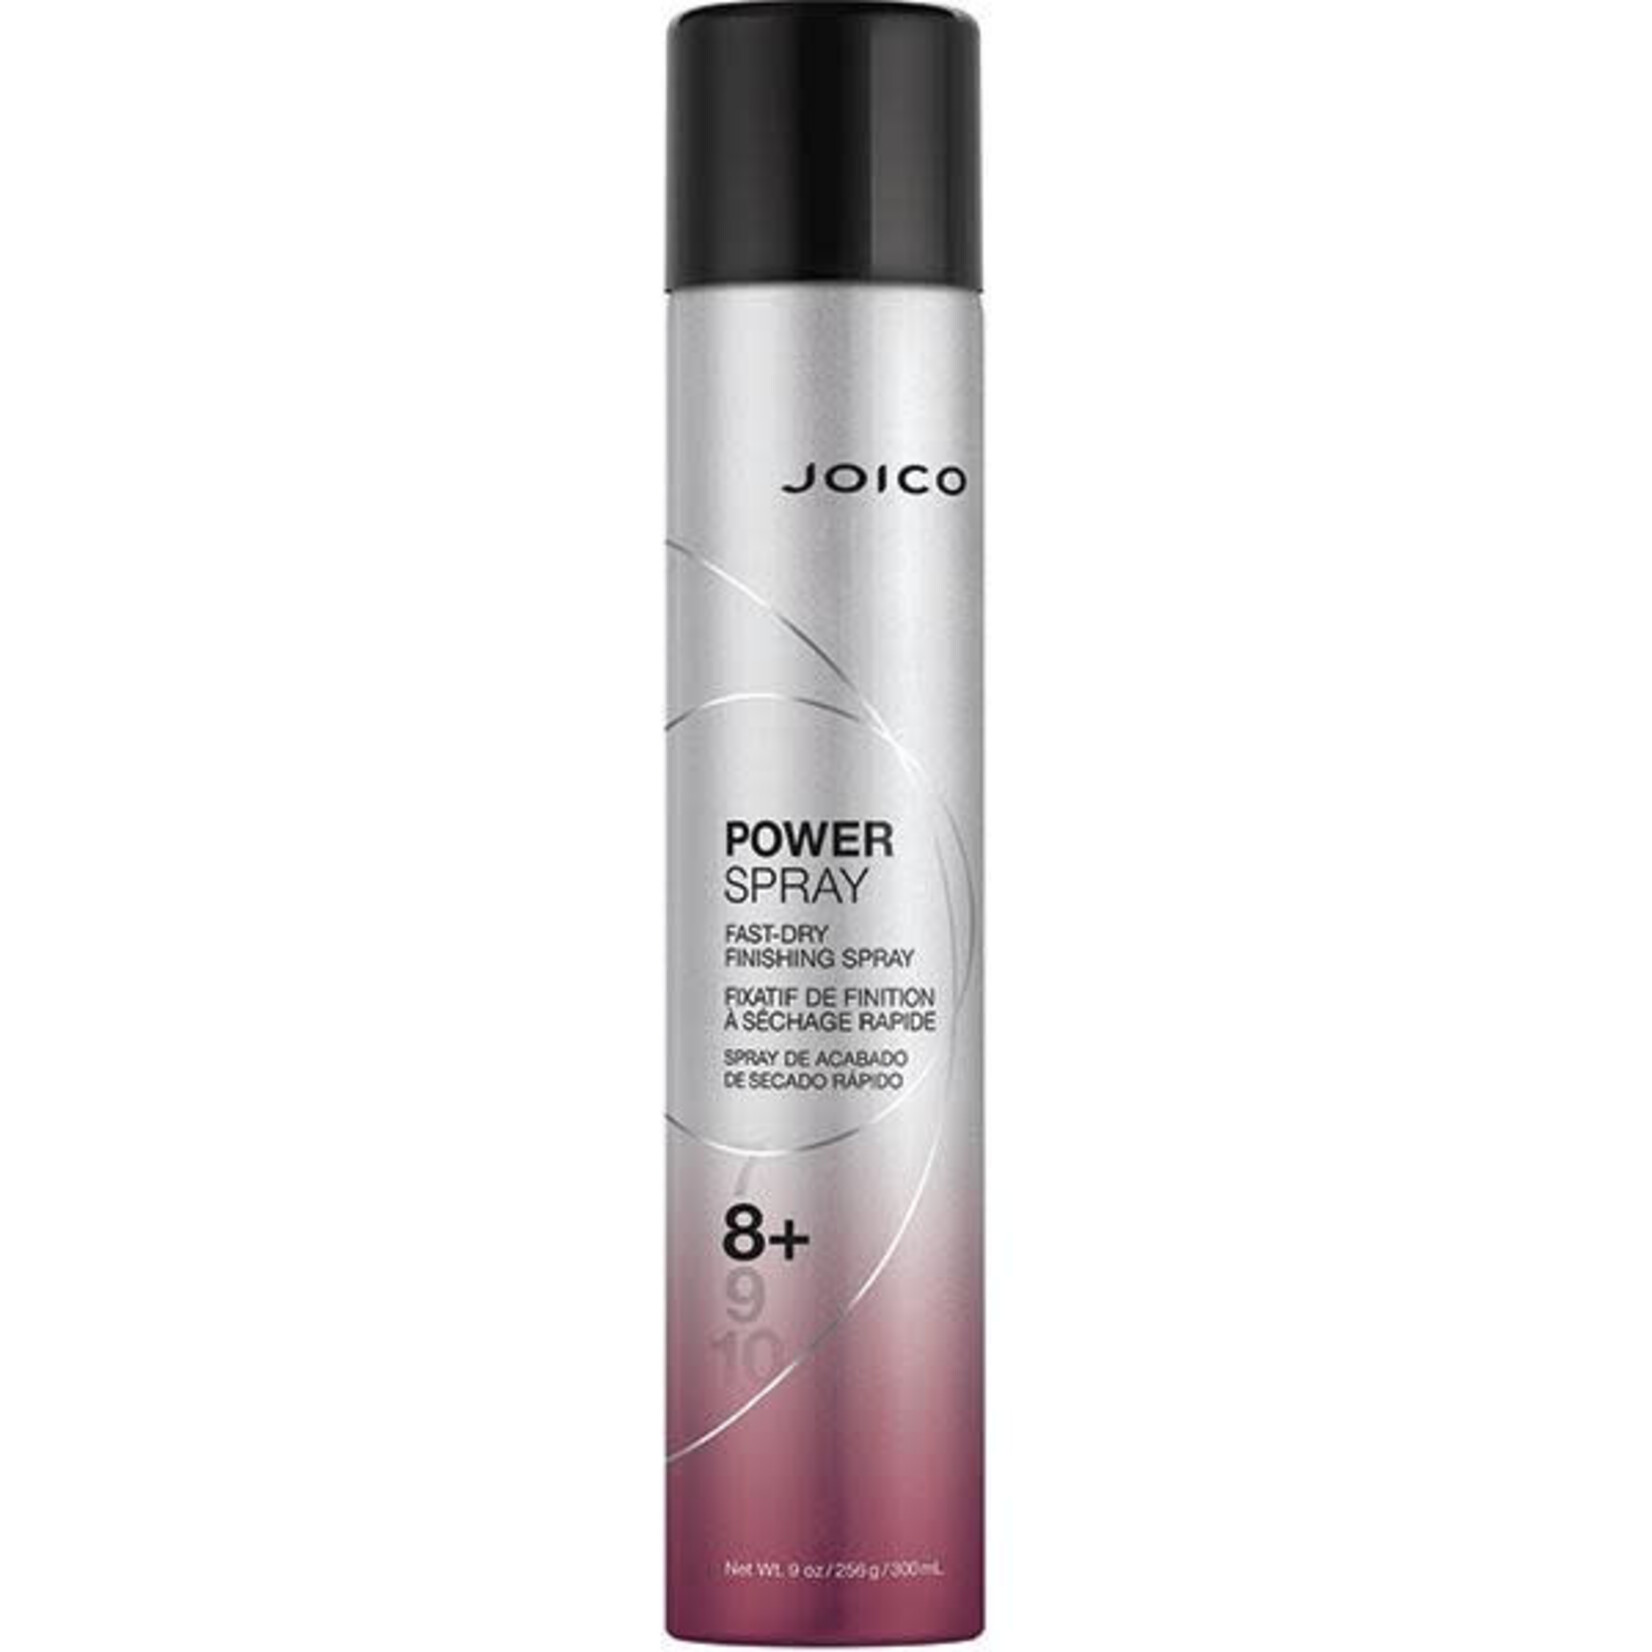 Joico Joico - Power Spray 8 - Fixatif de finition 300ml